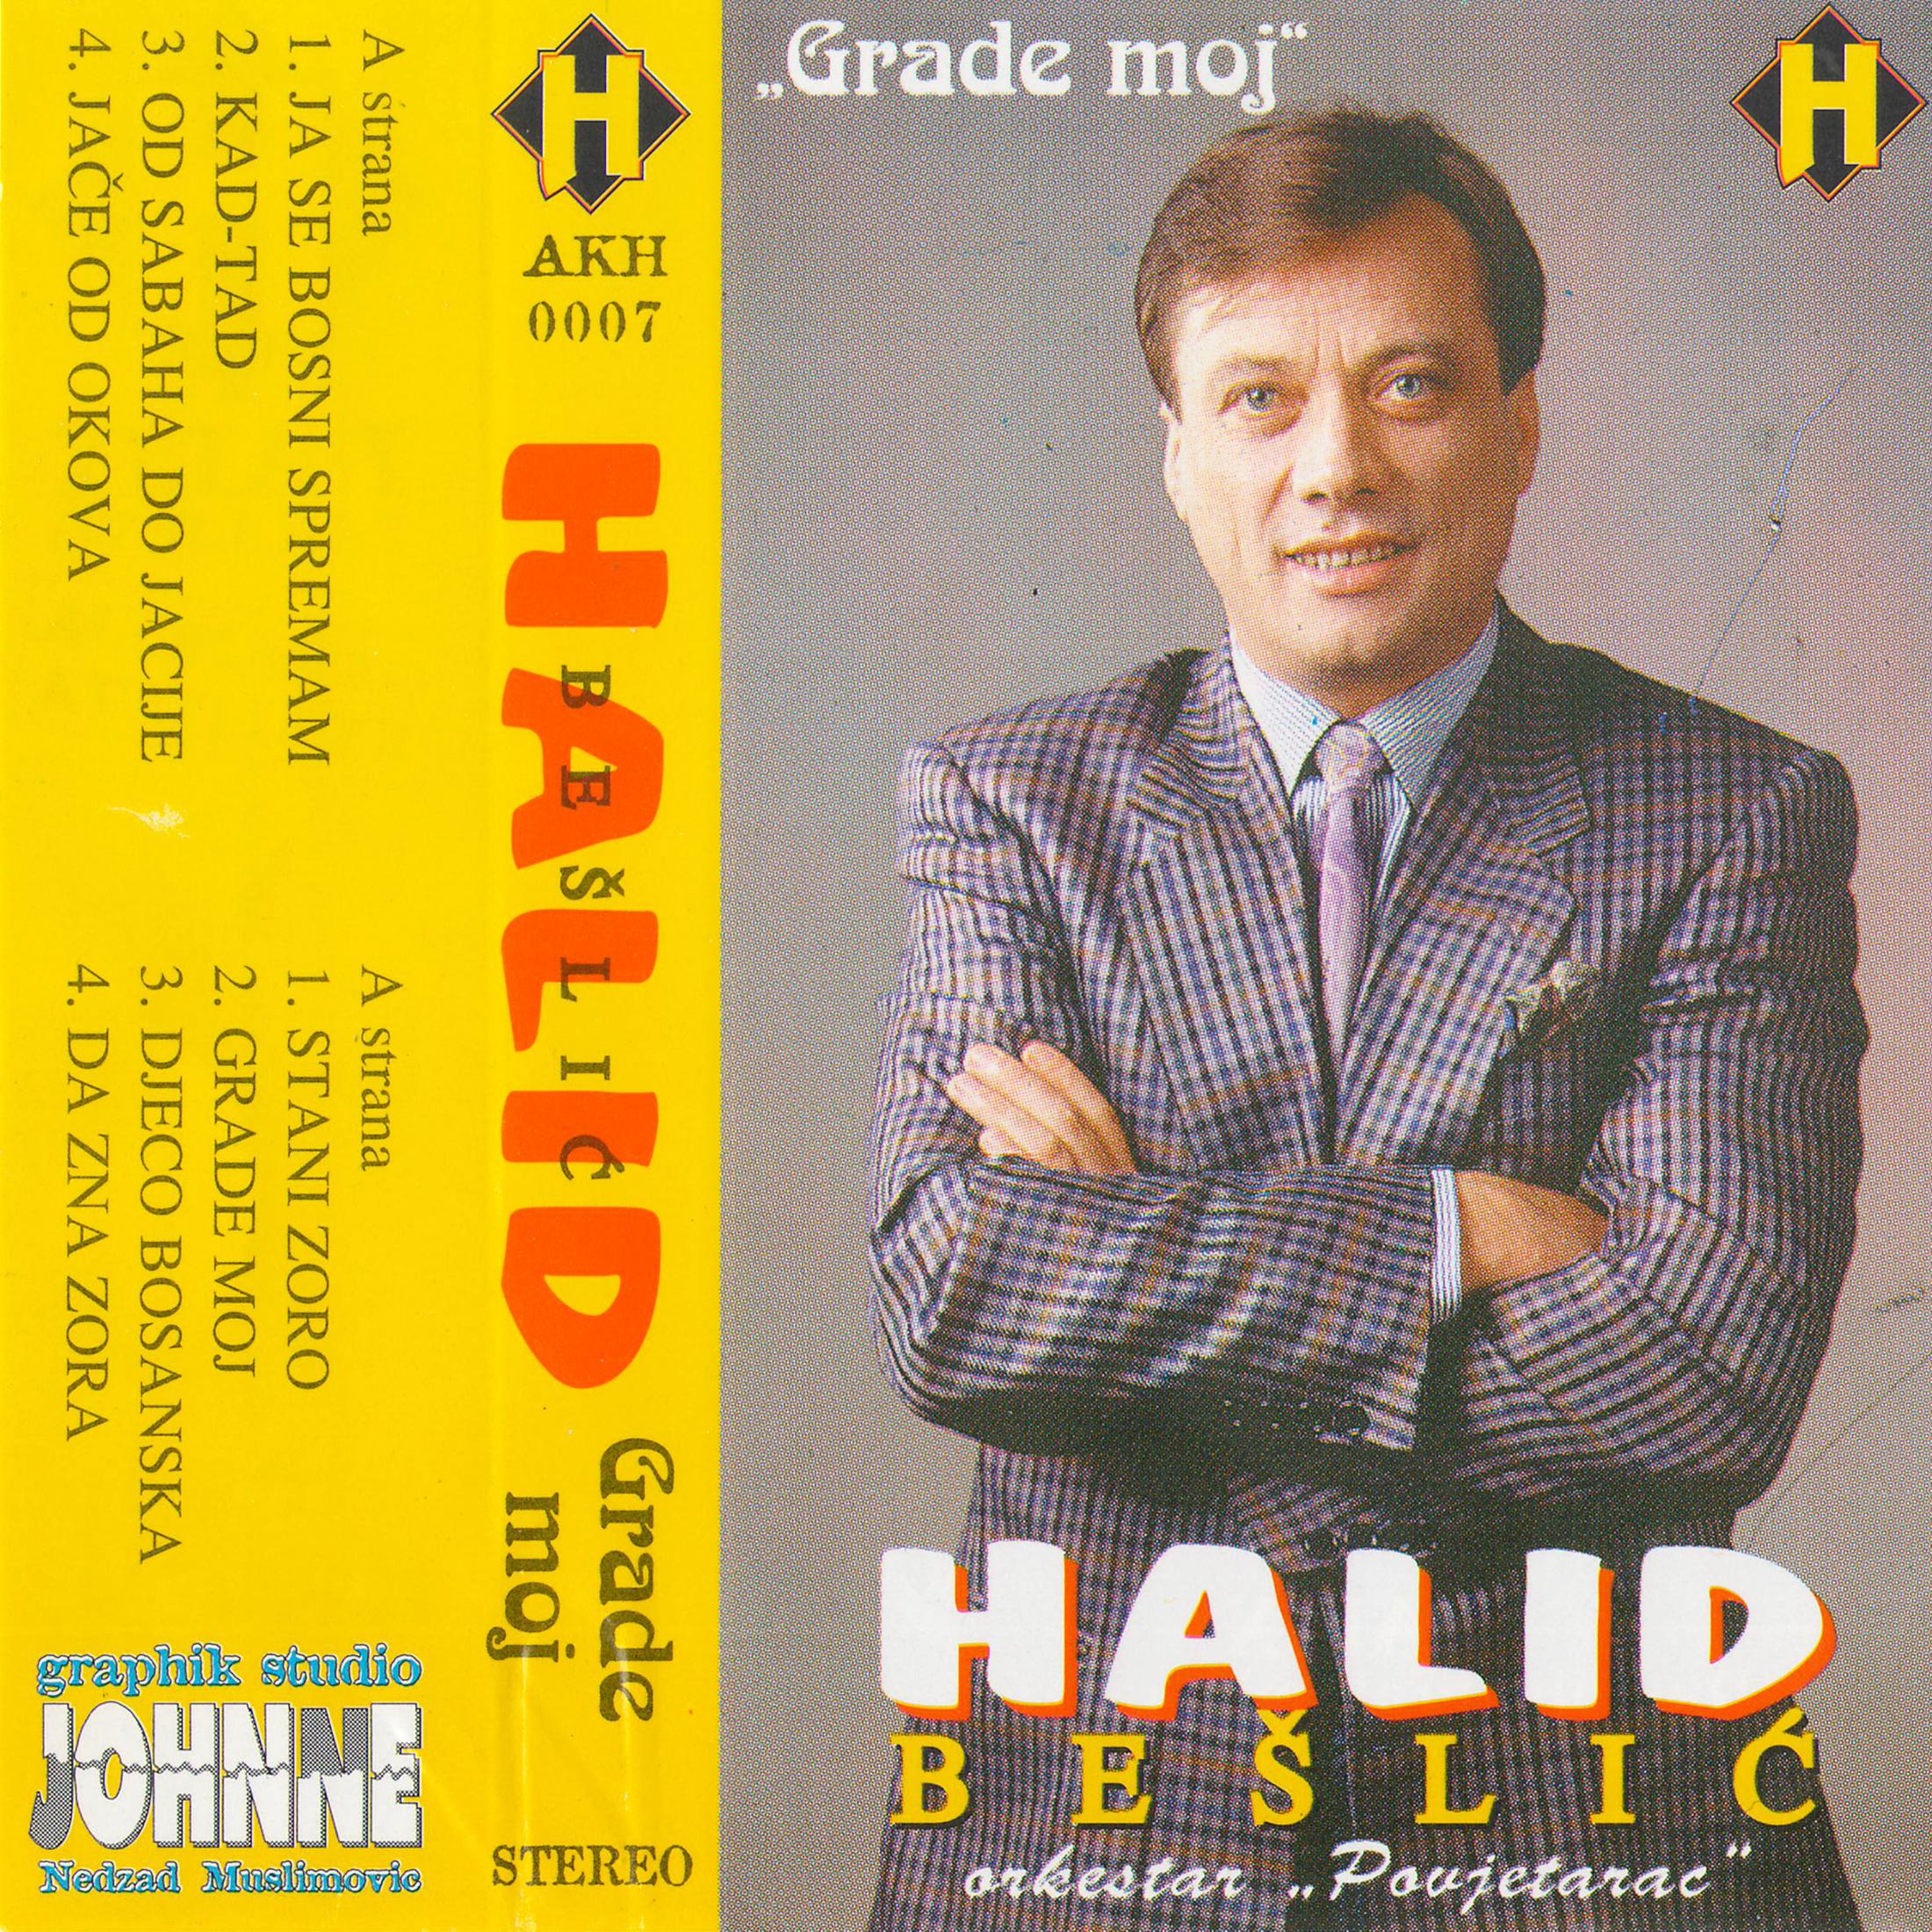 Djeco Bosanska (Bosnian music)